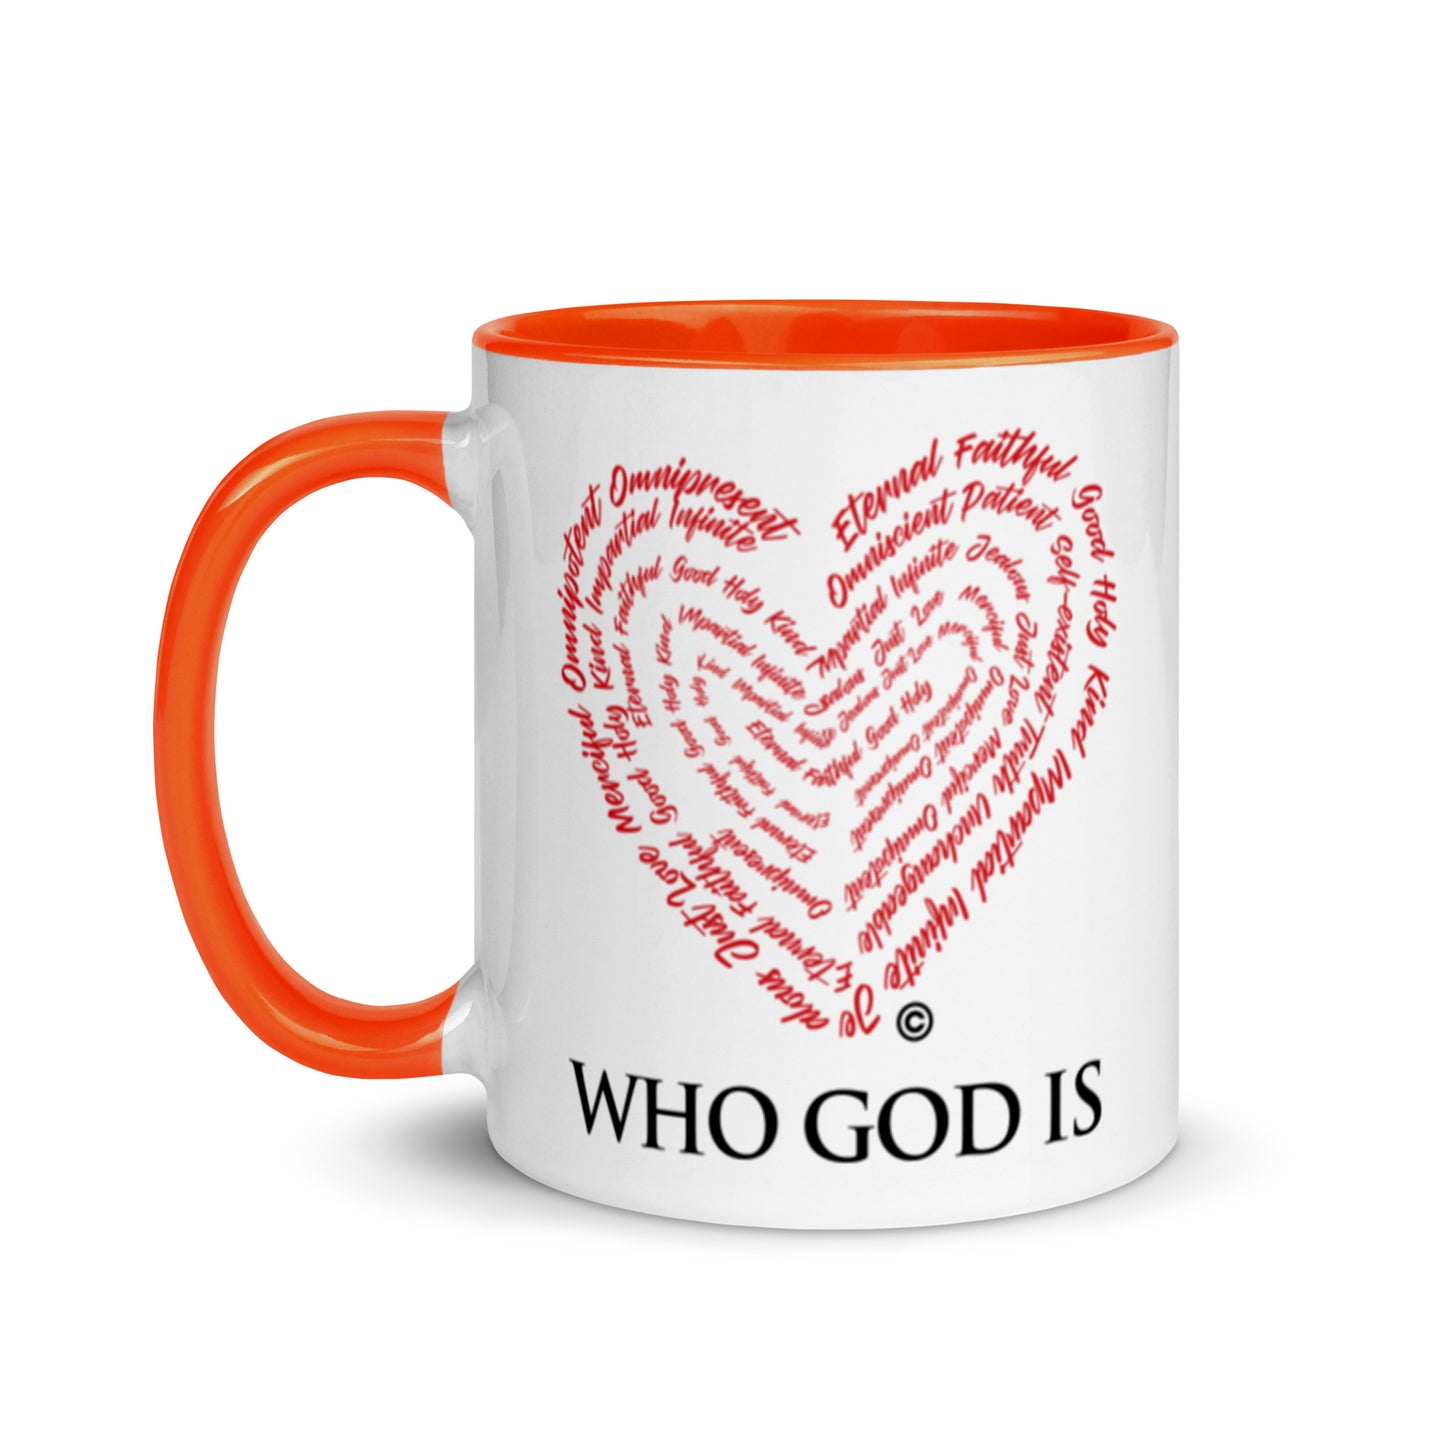 Who God Is Mug with Color Inside